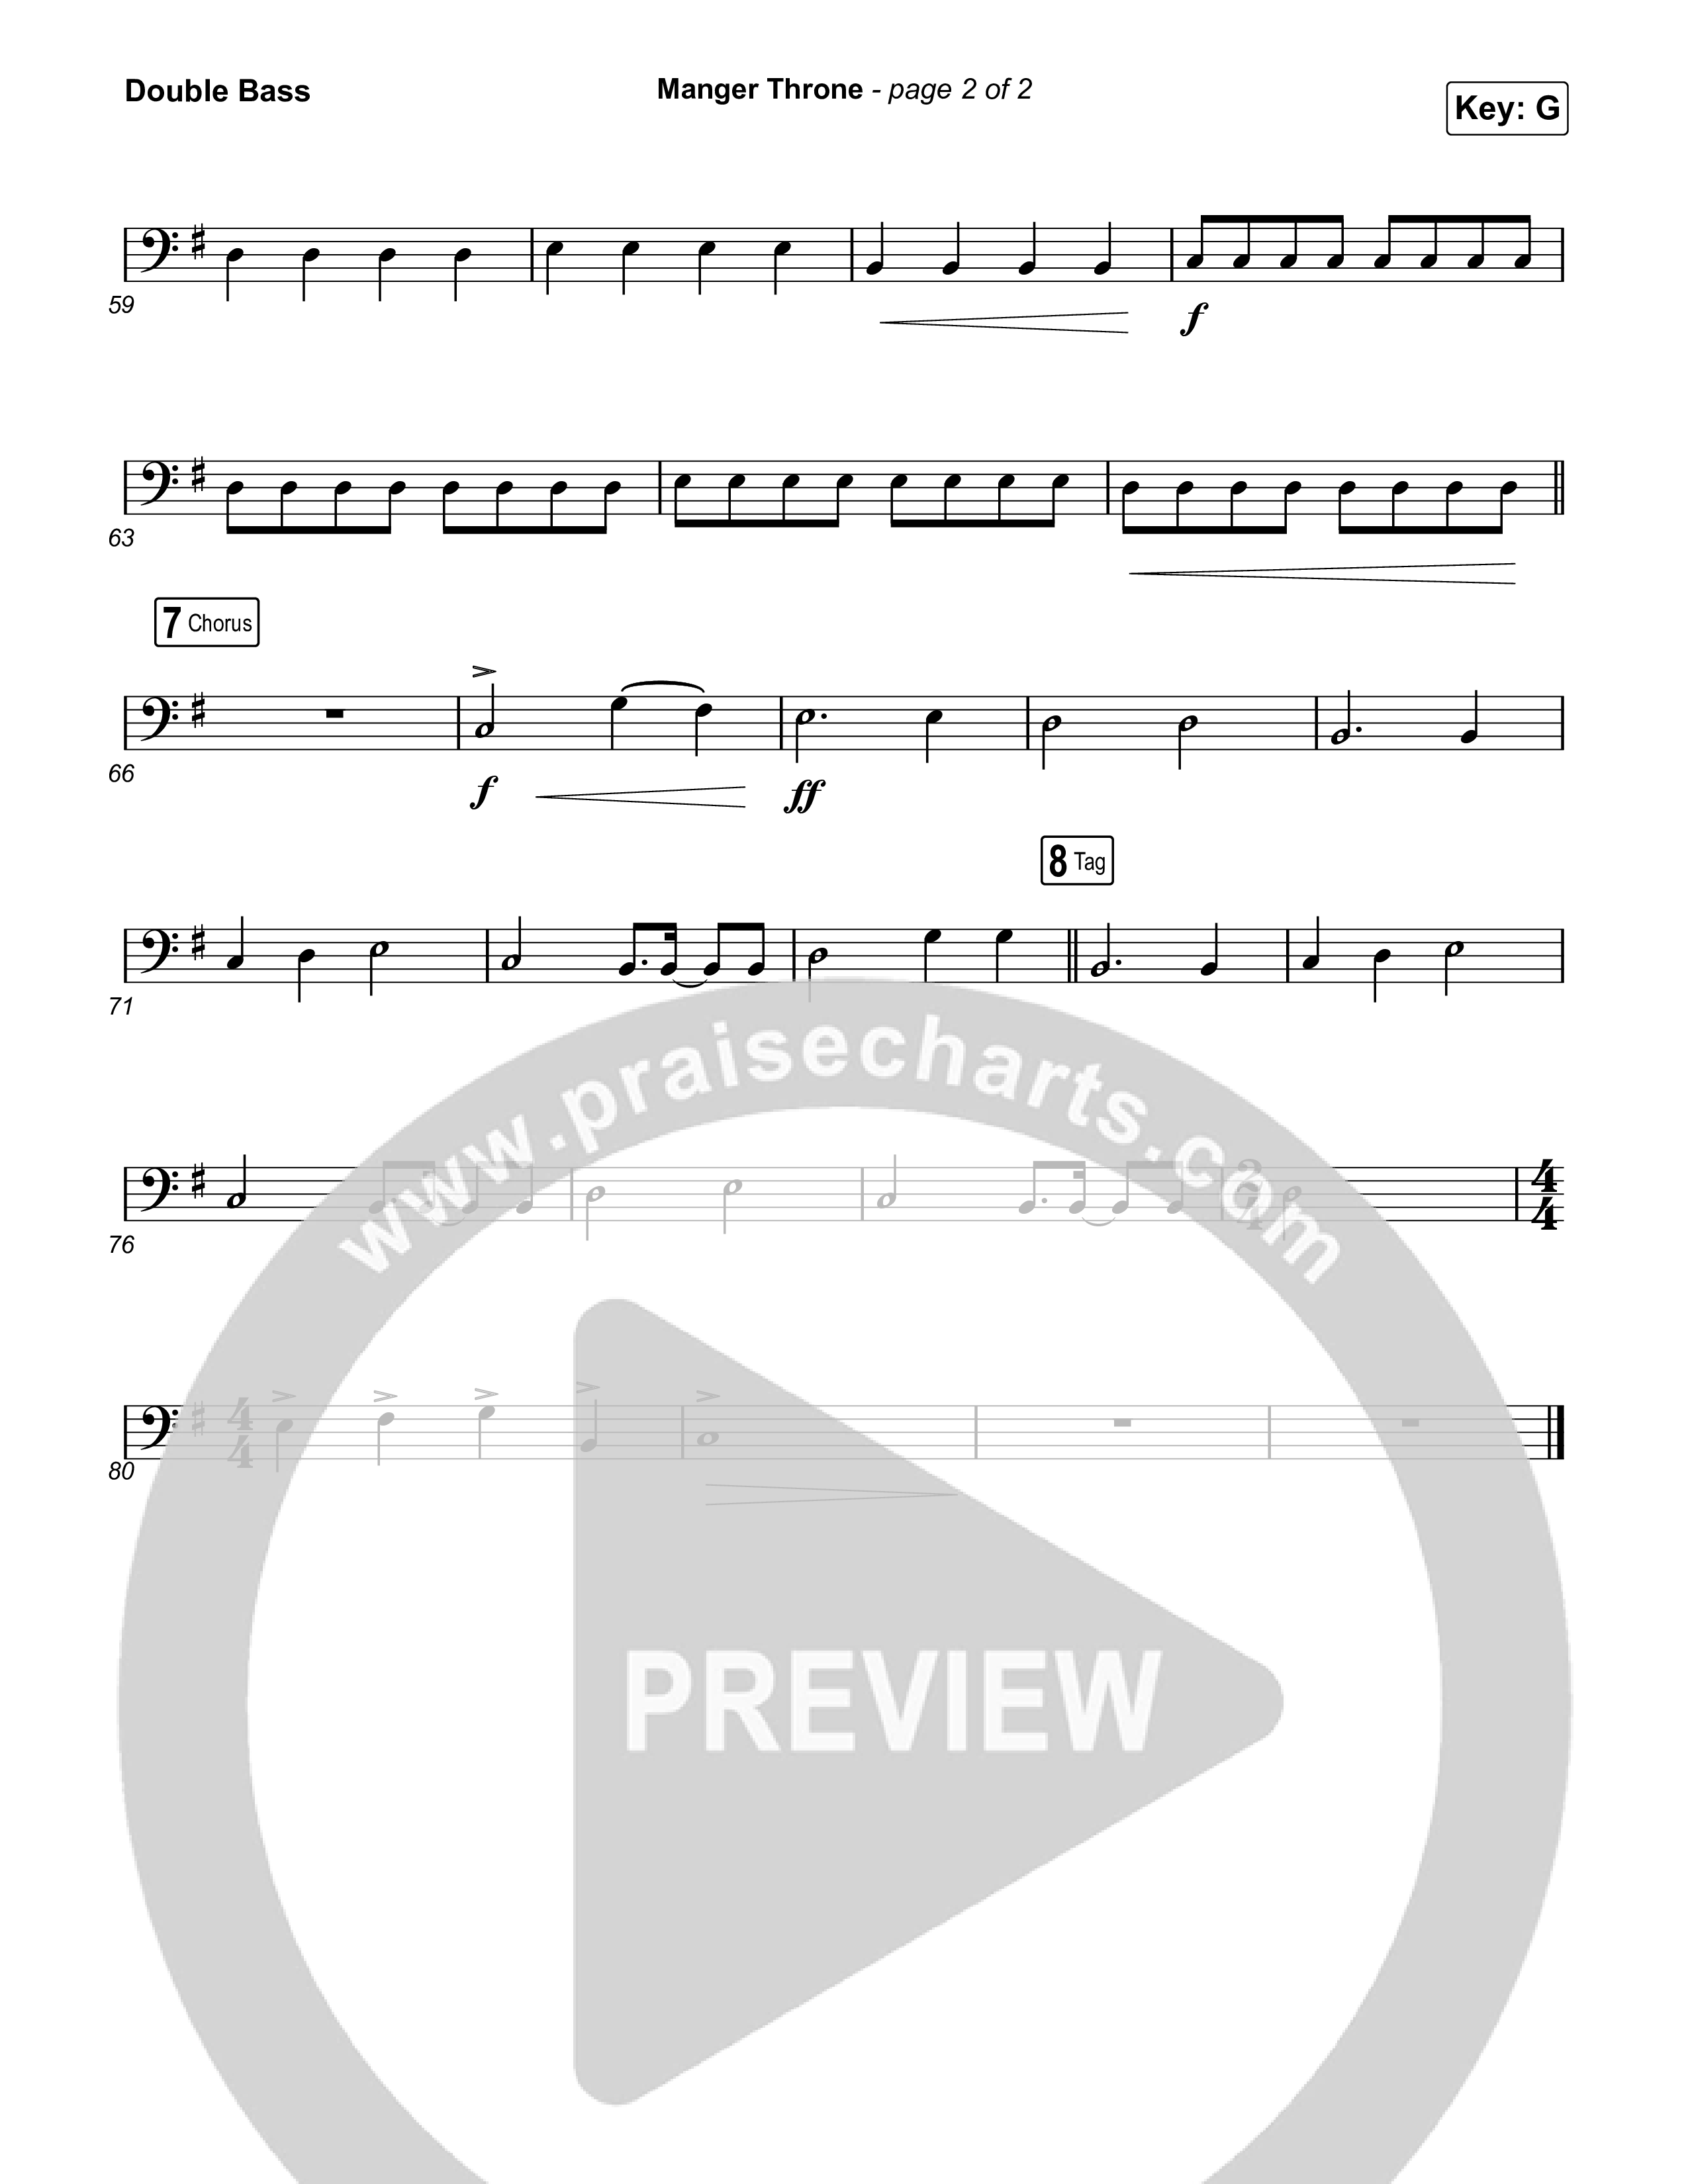 Manger Throne (Choral Anthem SATB) Double Bass (Phil Wickham / Arr. Erik Foster)